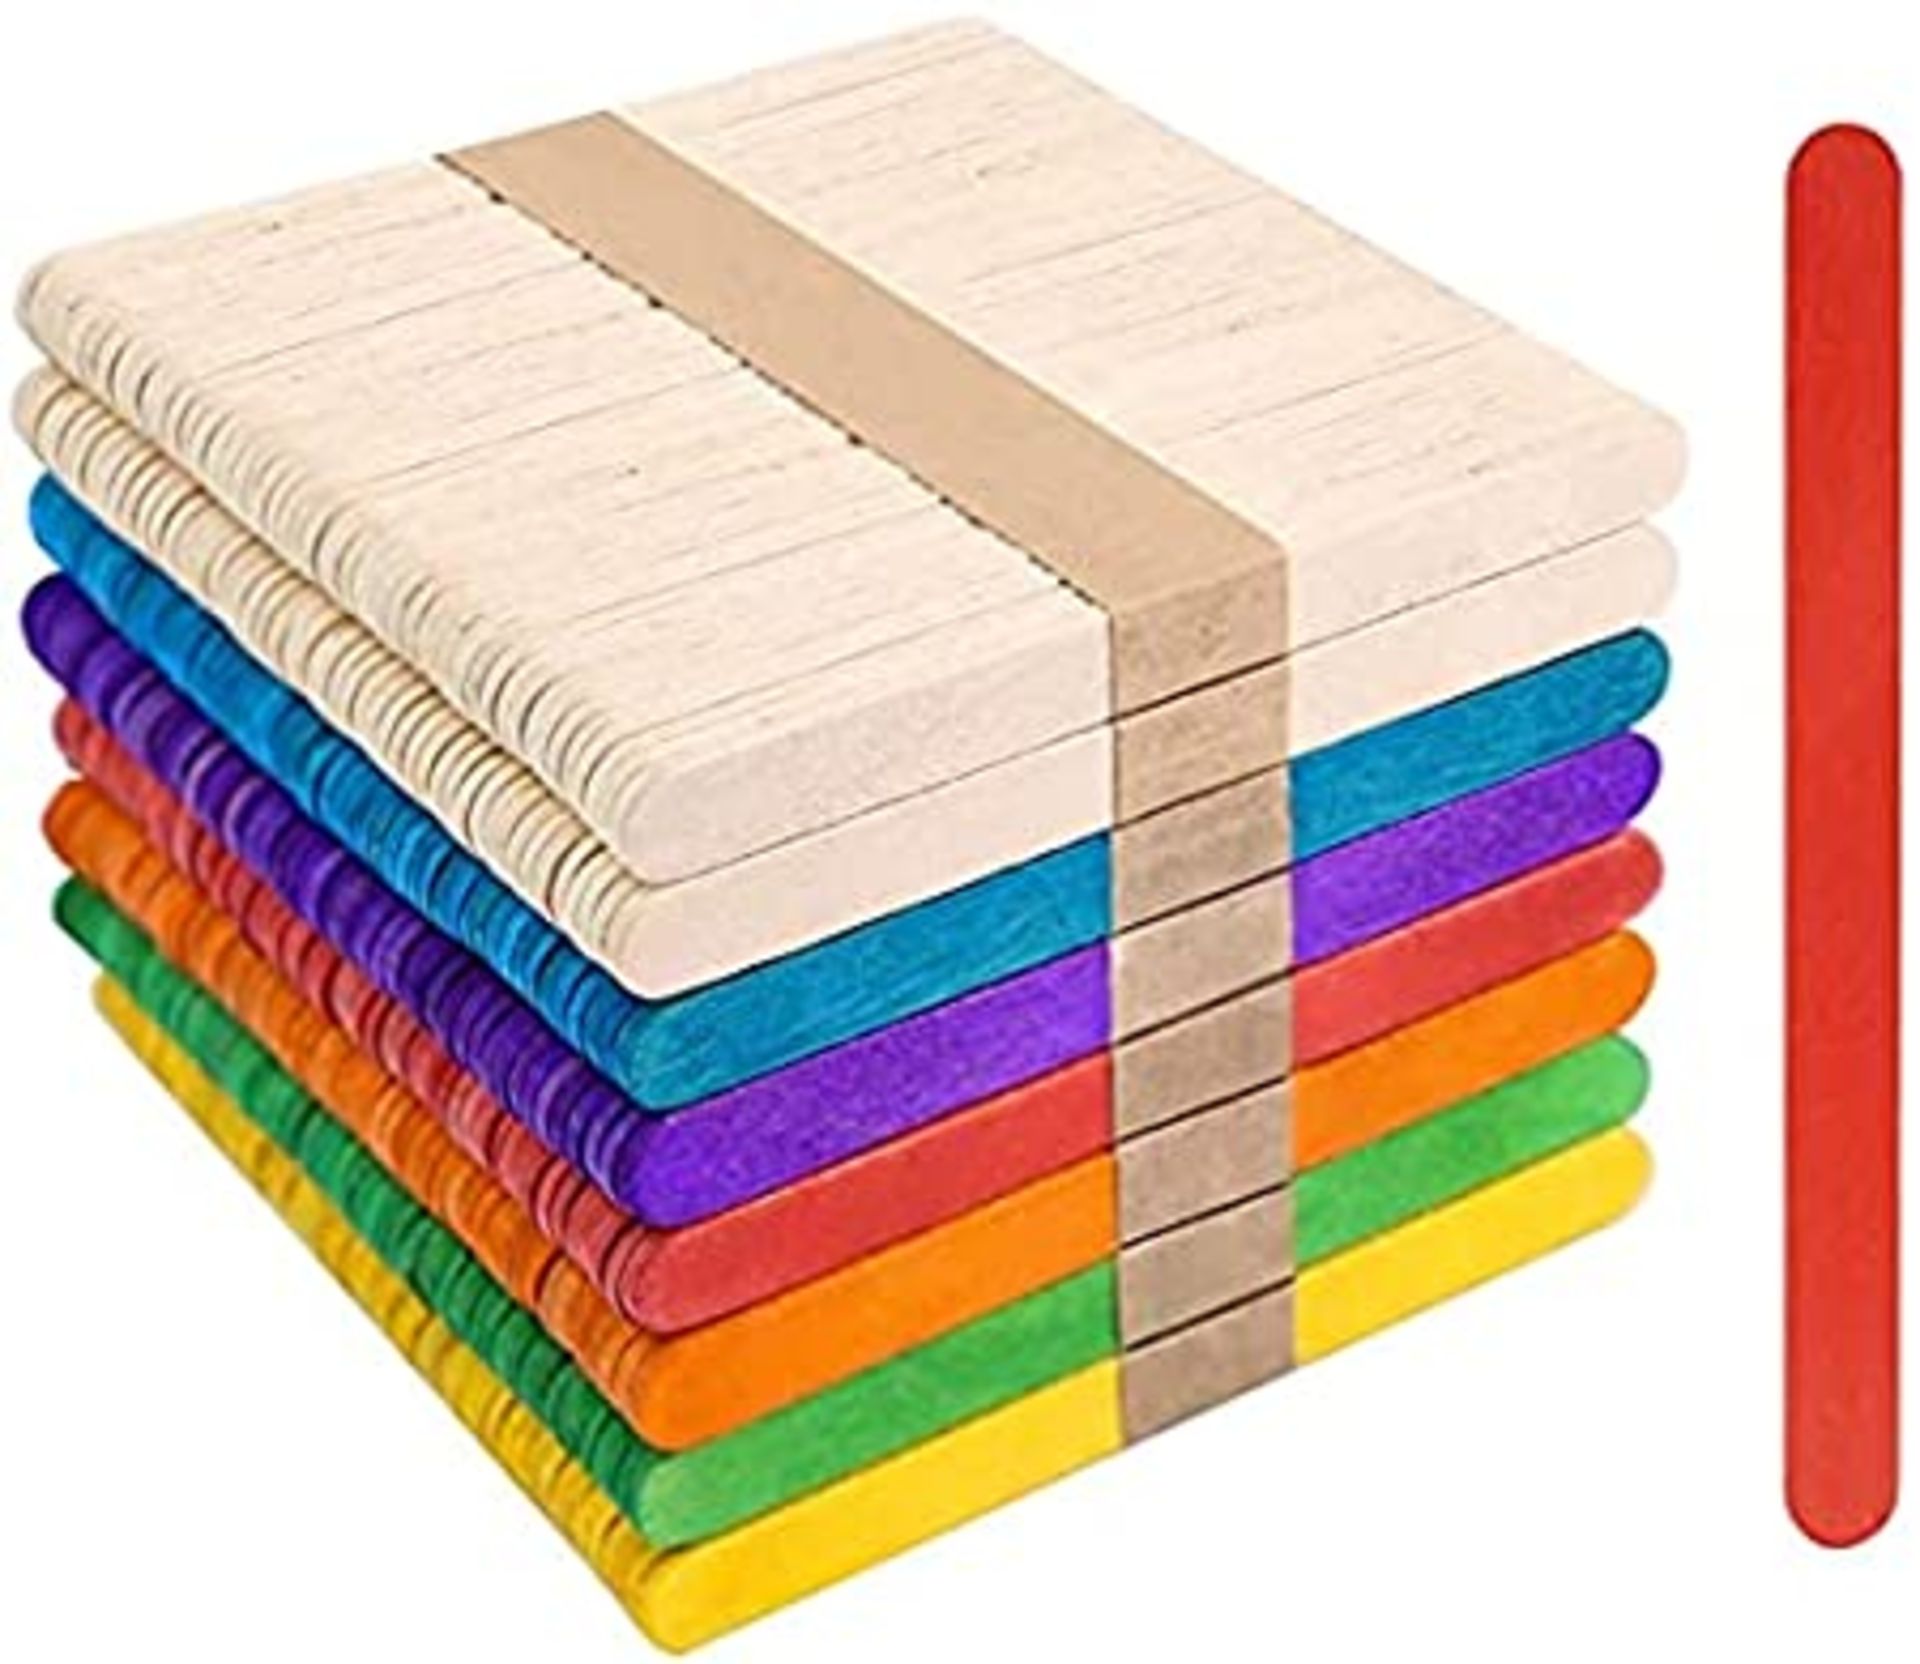 RRP - £2.33 VGOODALL 400PCS Coloured Wood Craft Sticks, 7 Bright Colour Natural Jumbo Wooden Sticks